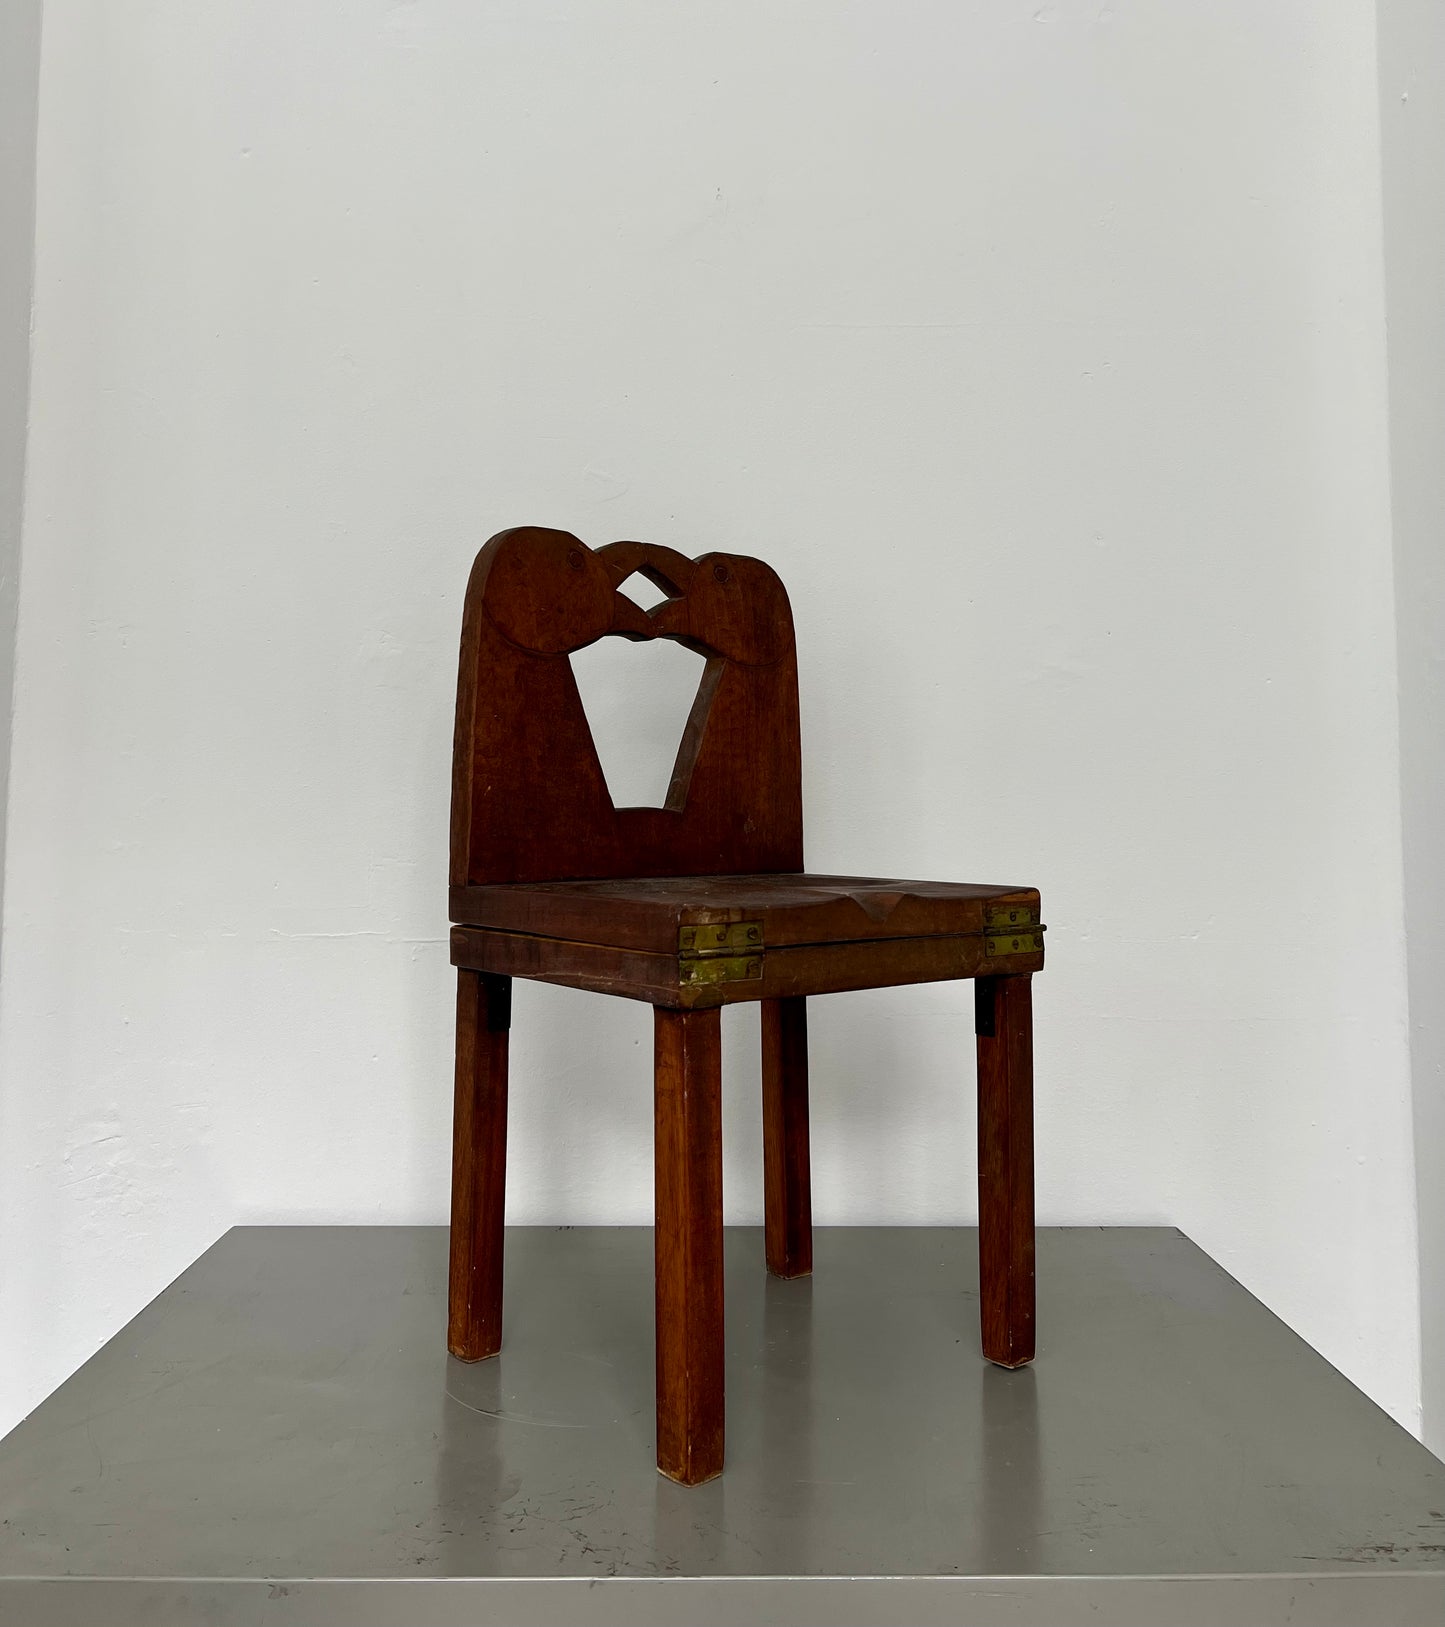 Gunnar Westman. Unique folding chair